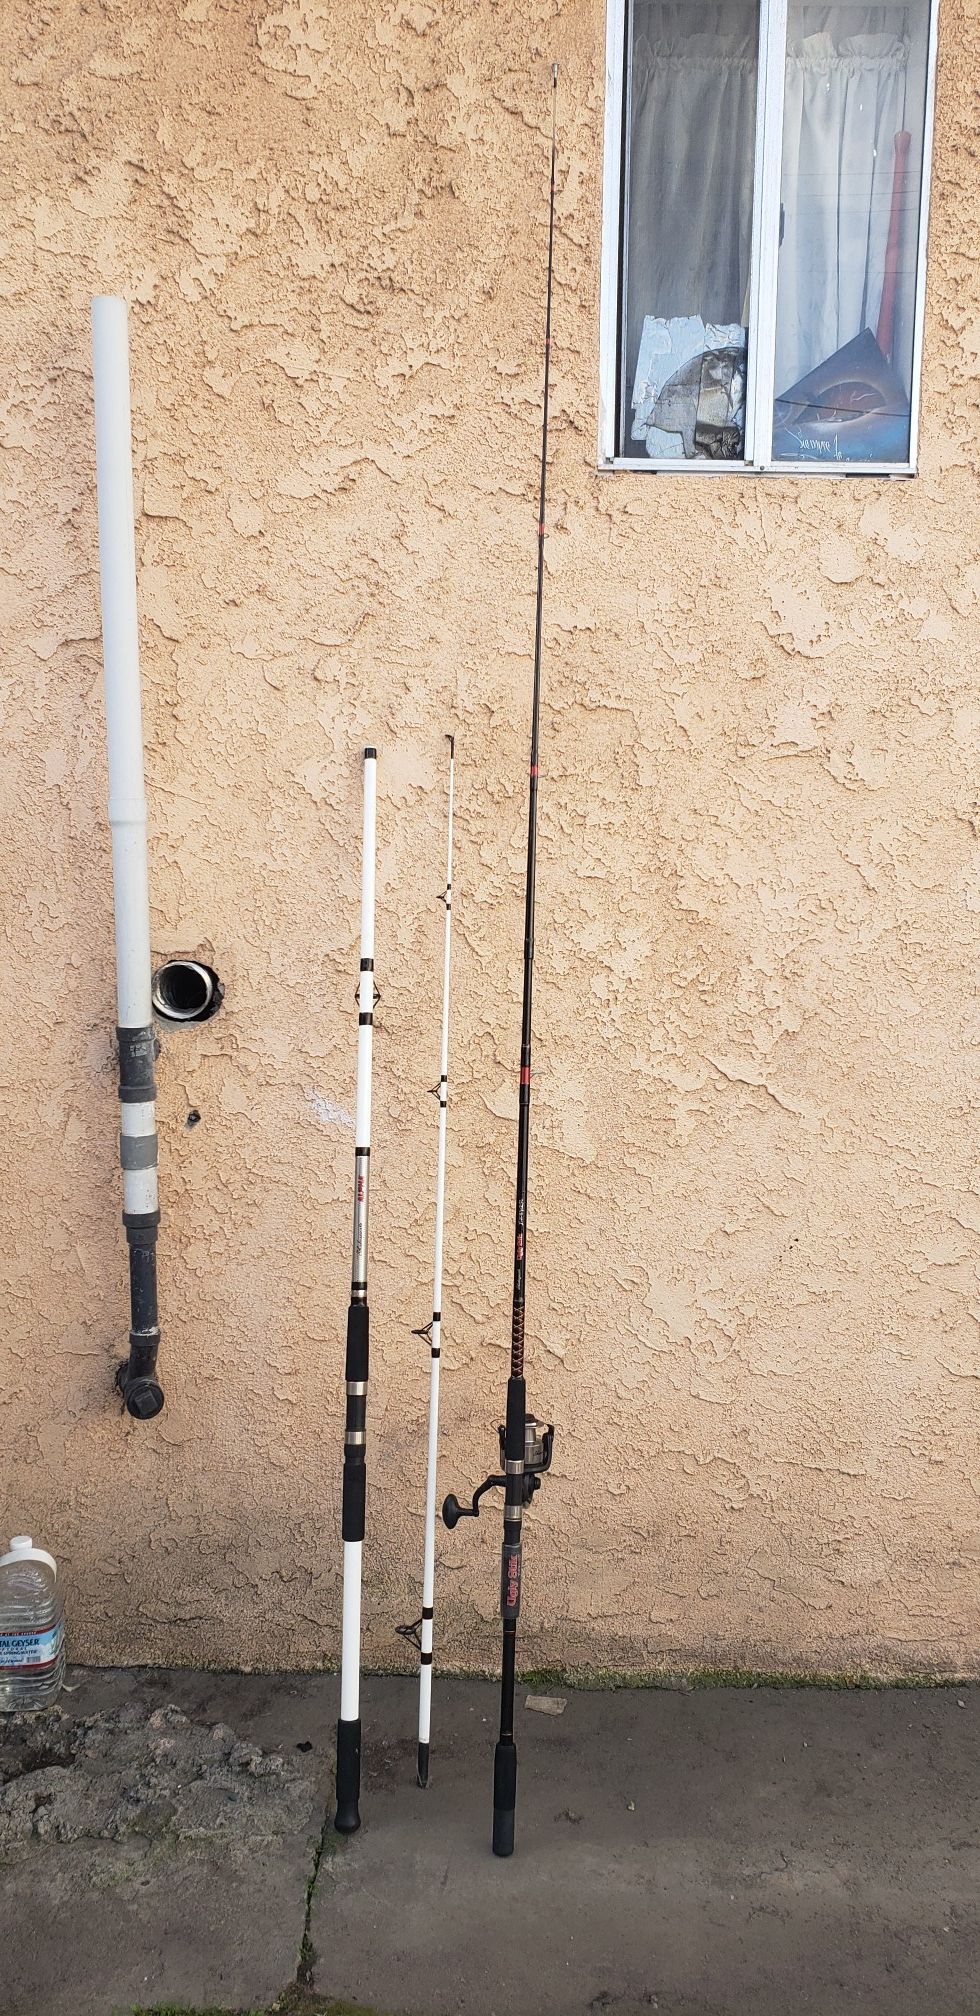 2 ocean fishing rods